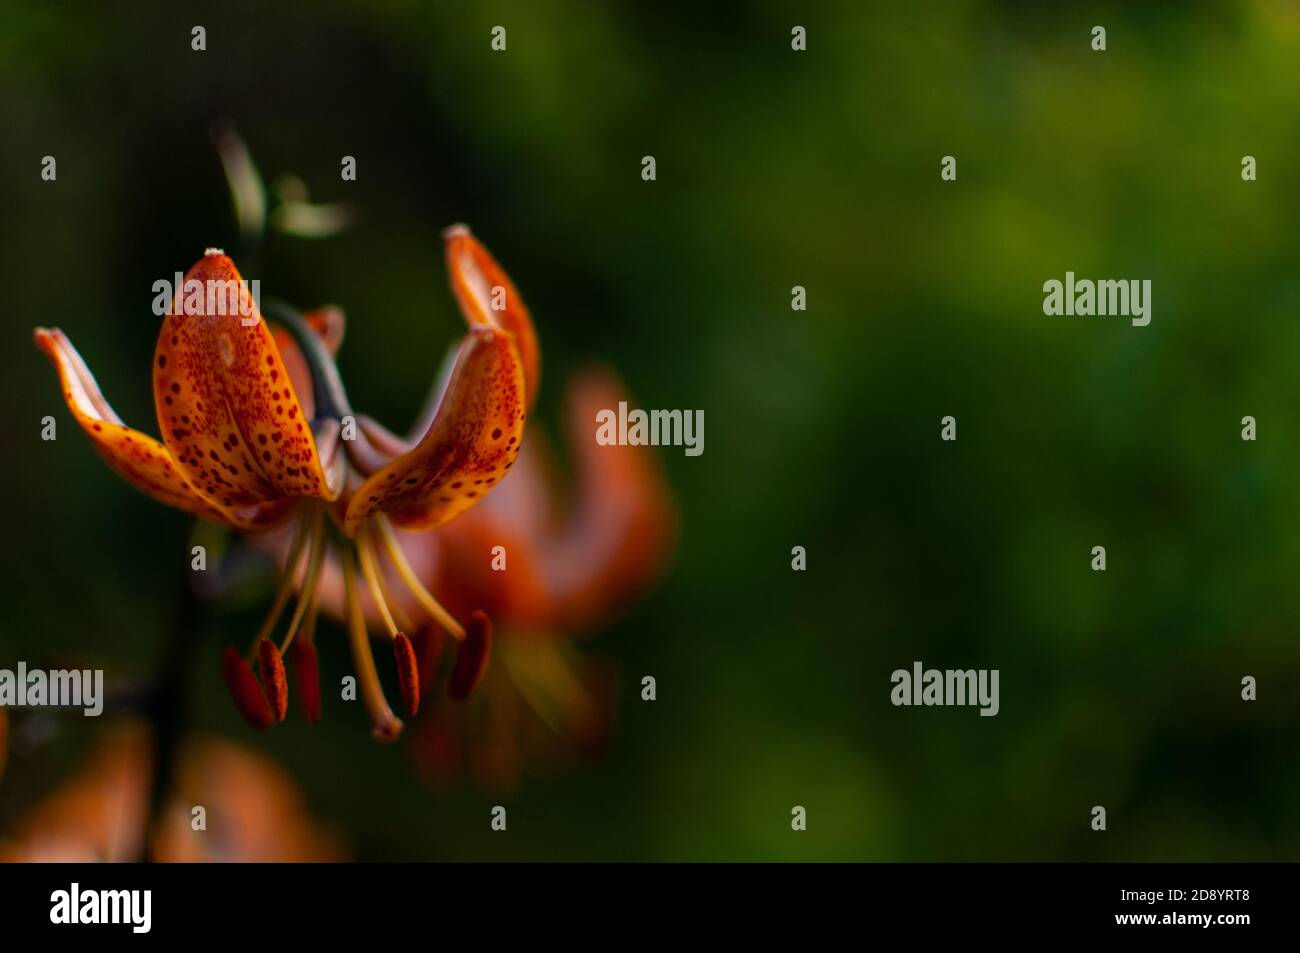 Orange Tiger Lily flower on a green blurred background with copy space. Lilium lancifolium, Lilium tigrinum. Stock Photo